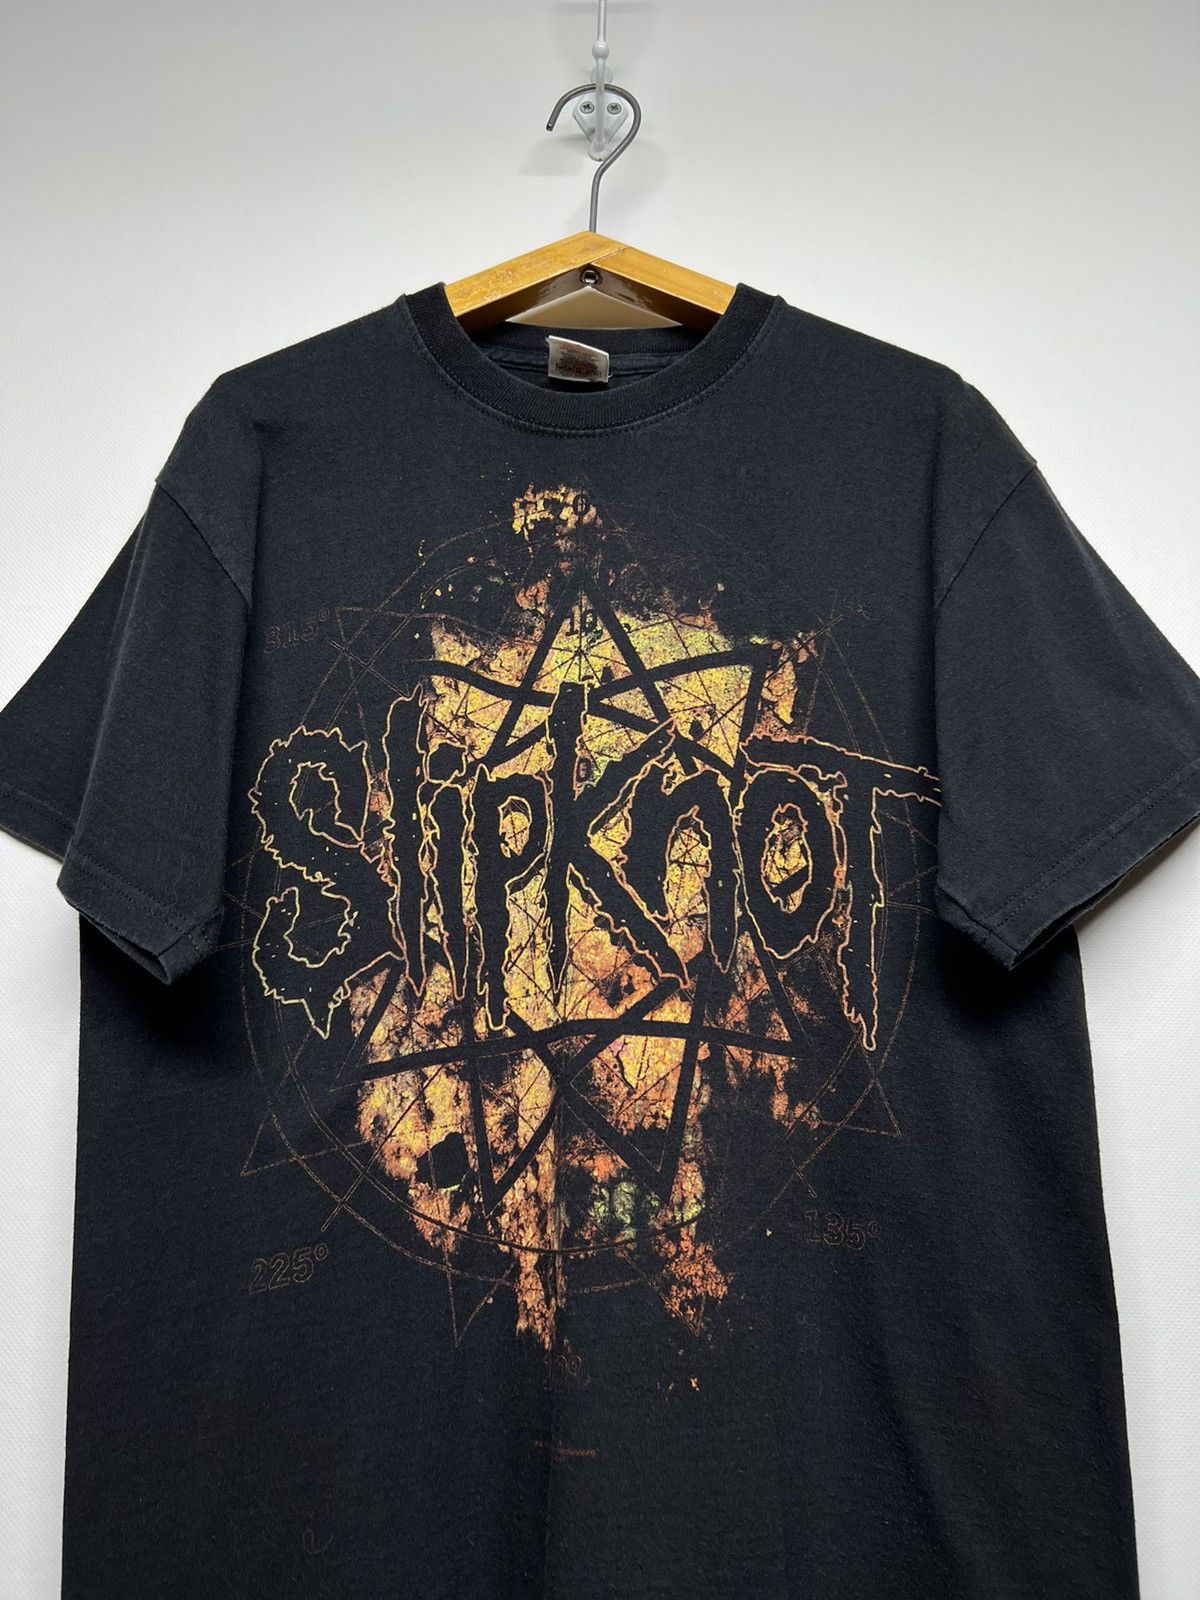 Vintage Vintage 2009 Slipknot All Hope Is Gone Tour T-Shirt Size US M / EU 48-50 / 2 - 3 Thumbnail